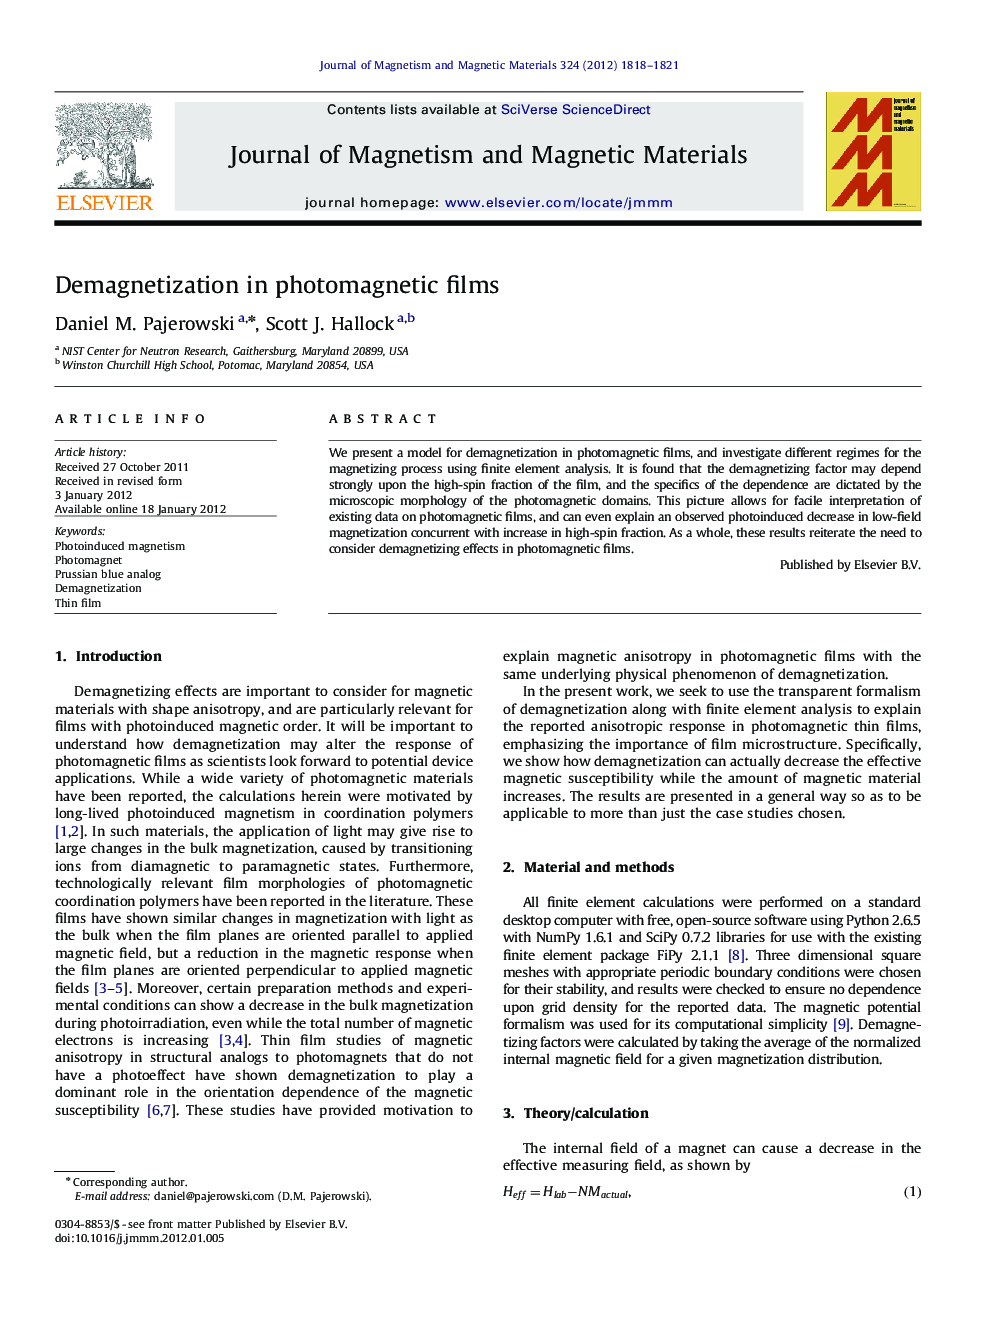 Demagnetization in photomagnetic films